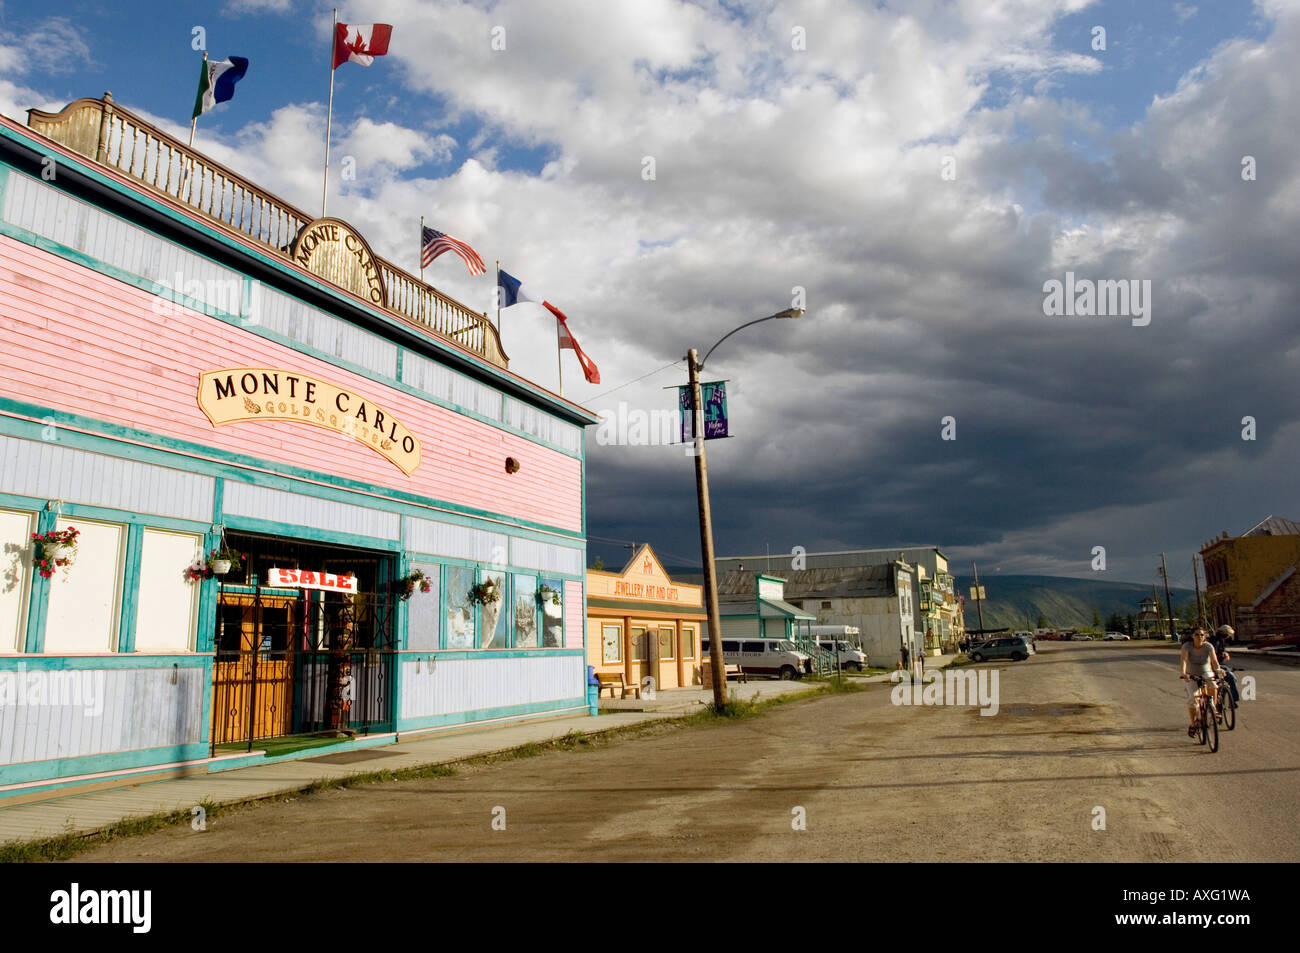 Dawson city, Yukon Stock Photo